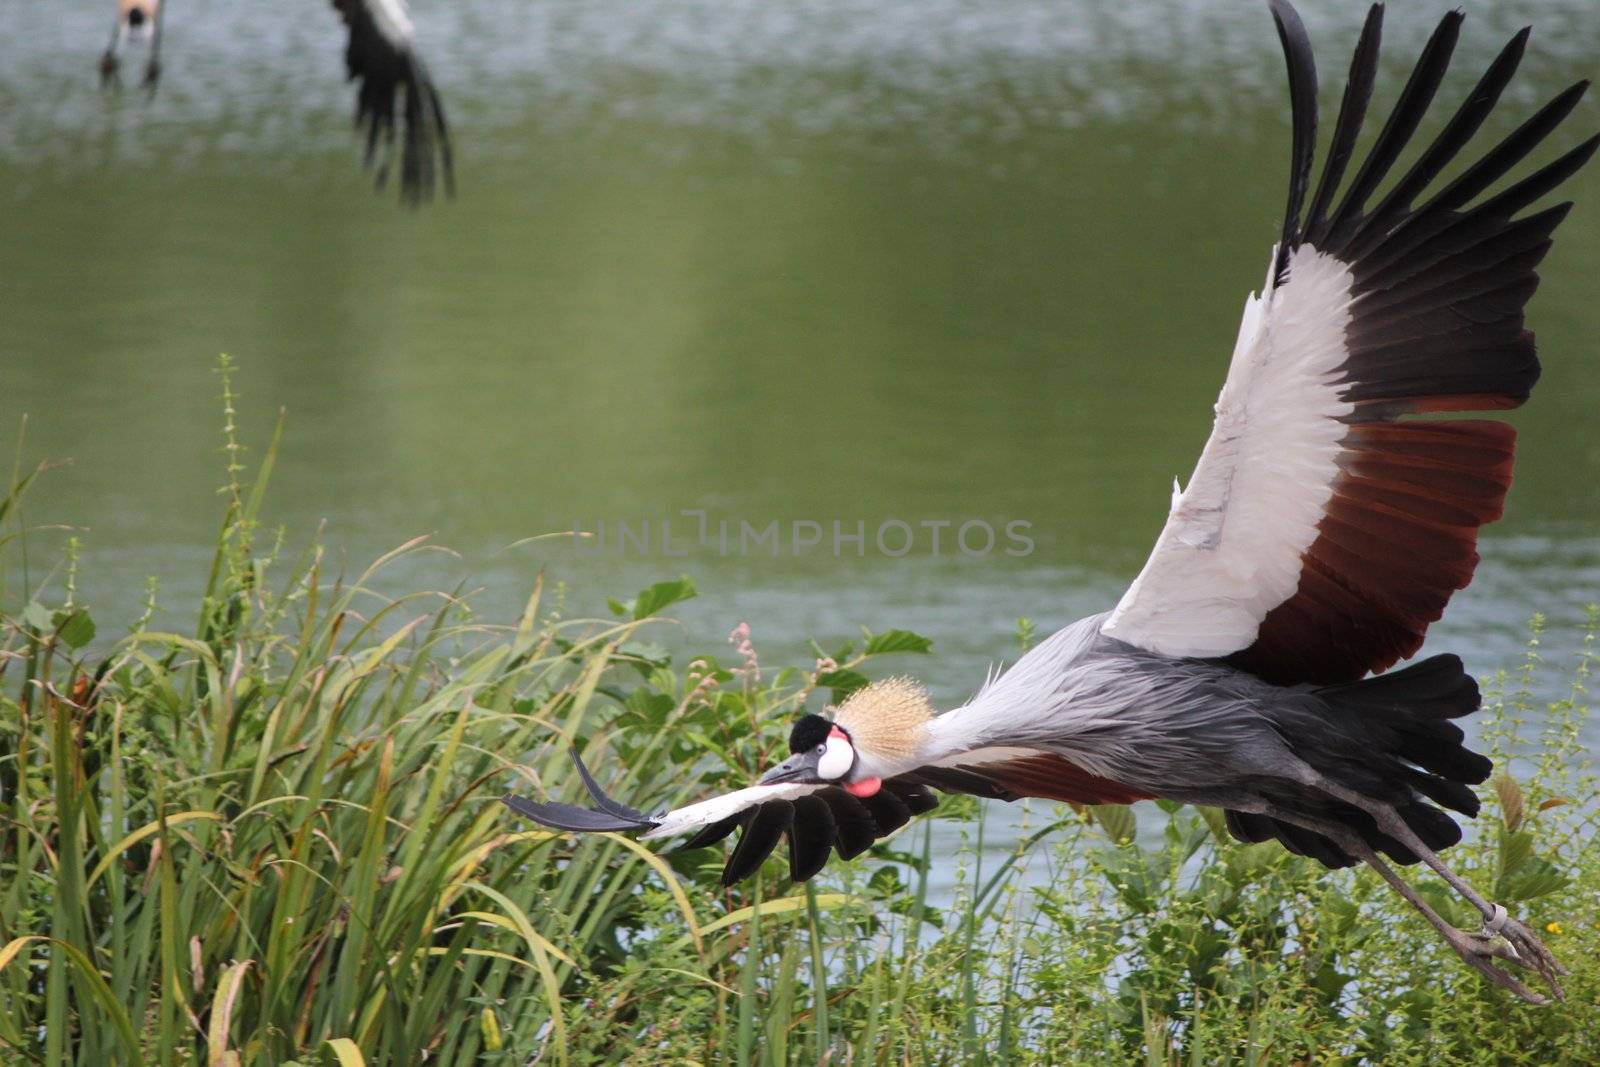 royal crane by mariephotos